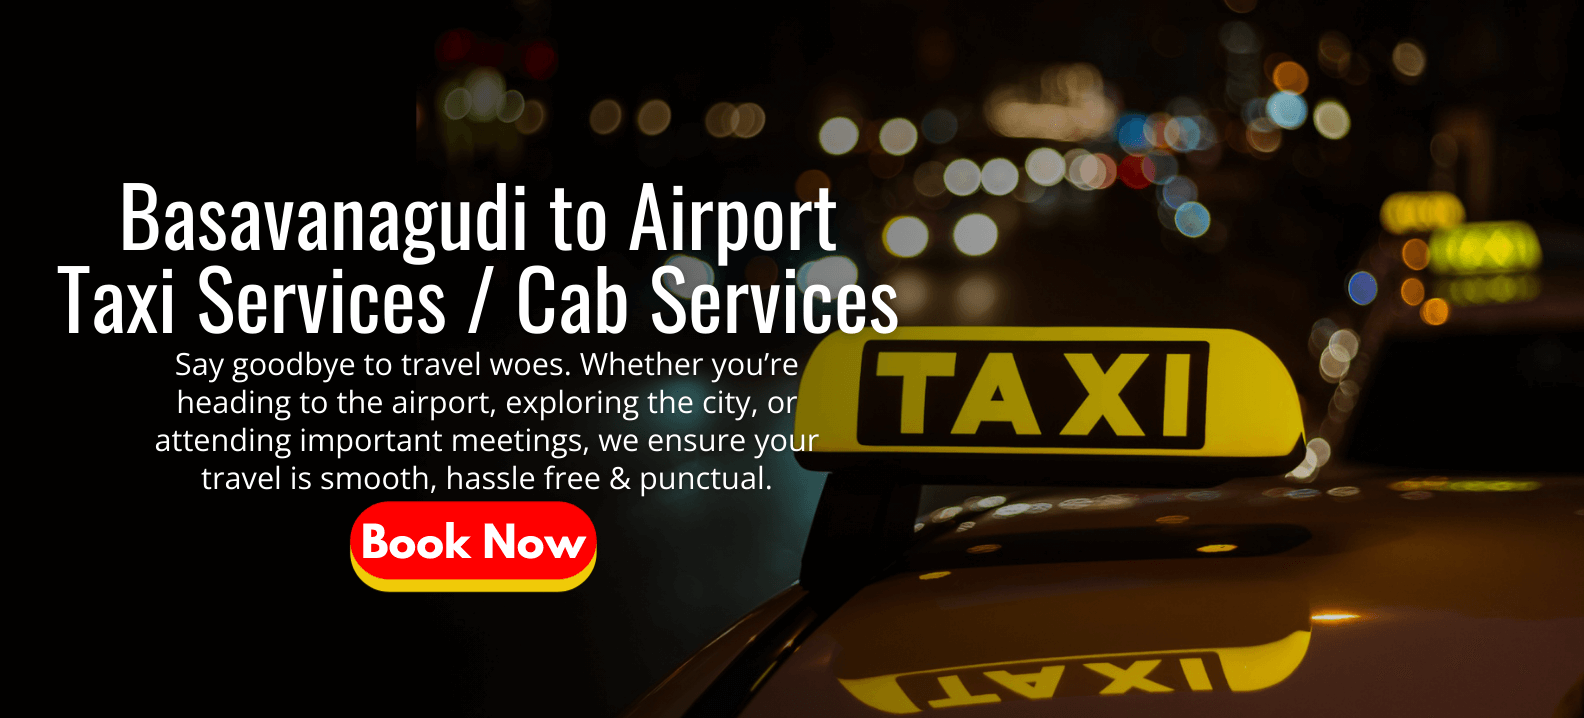 Basavanagudi to Airport Taxi Services _ Cab Services